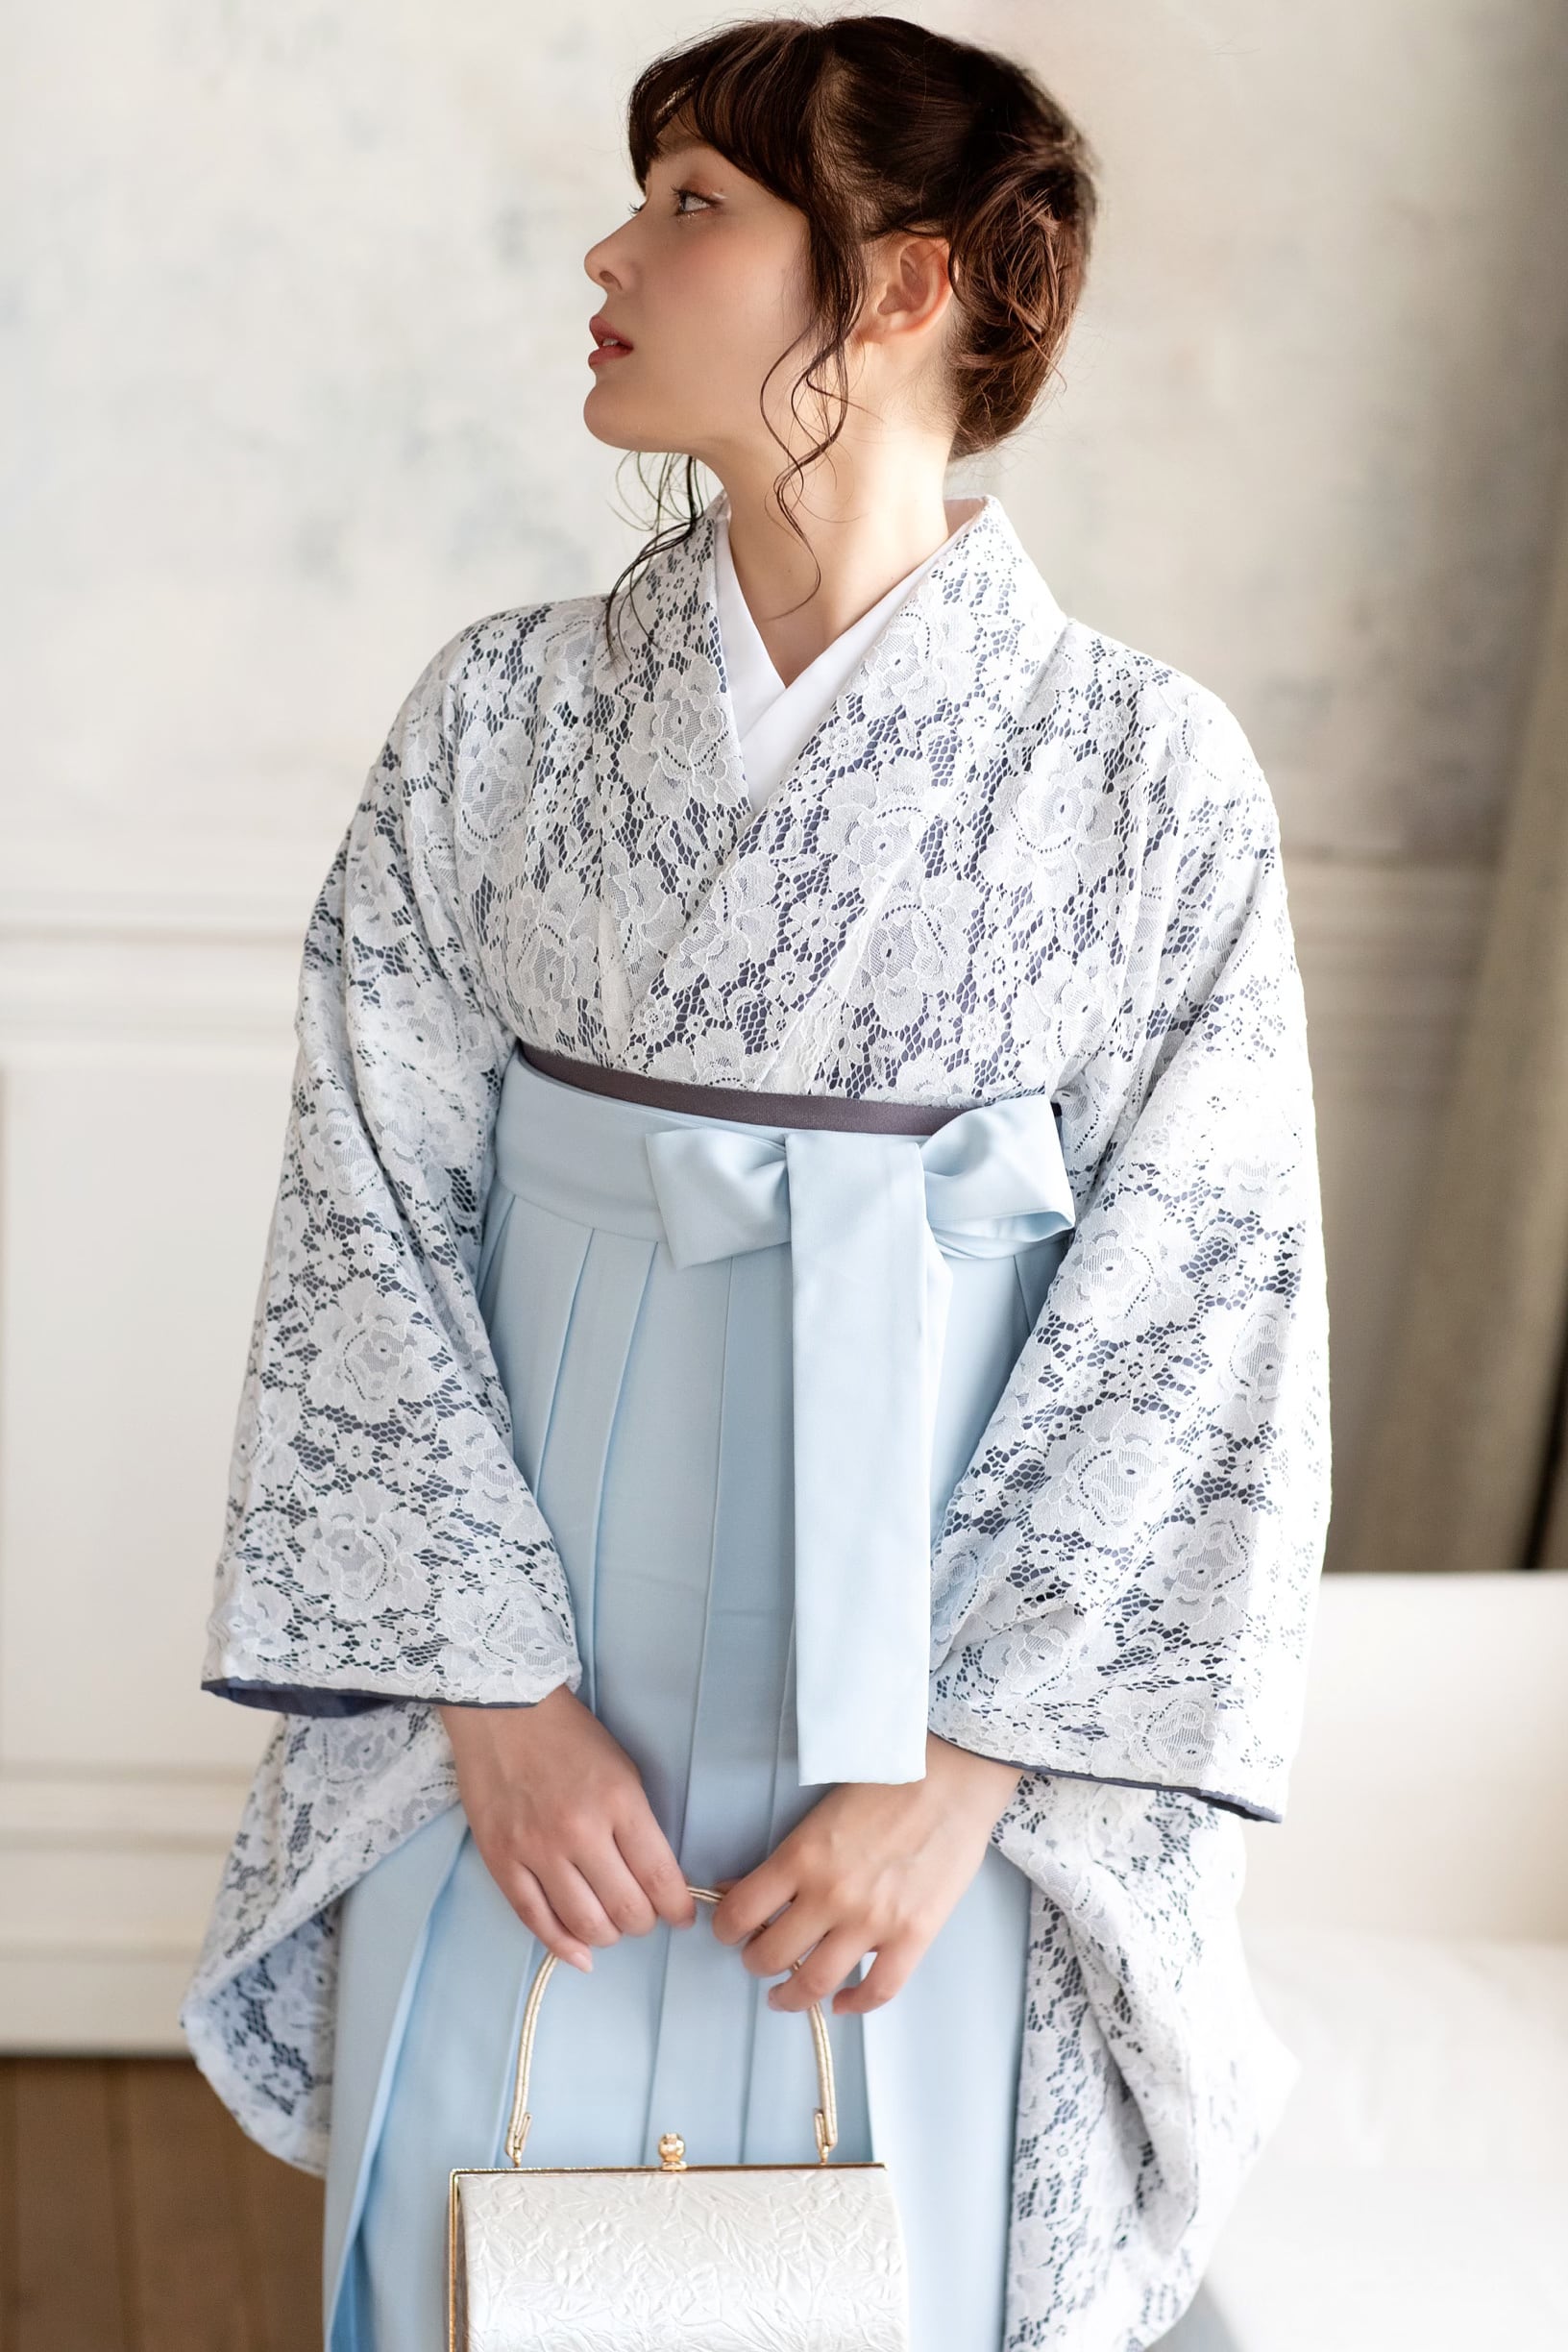 Kimono Sienne 卒業式袴 3点セット レース二尺袖 袴 卒業式 白レース